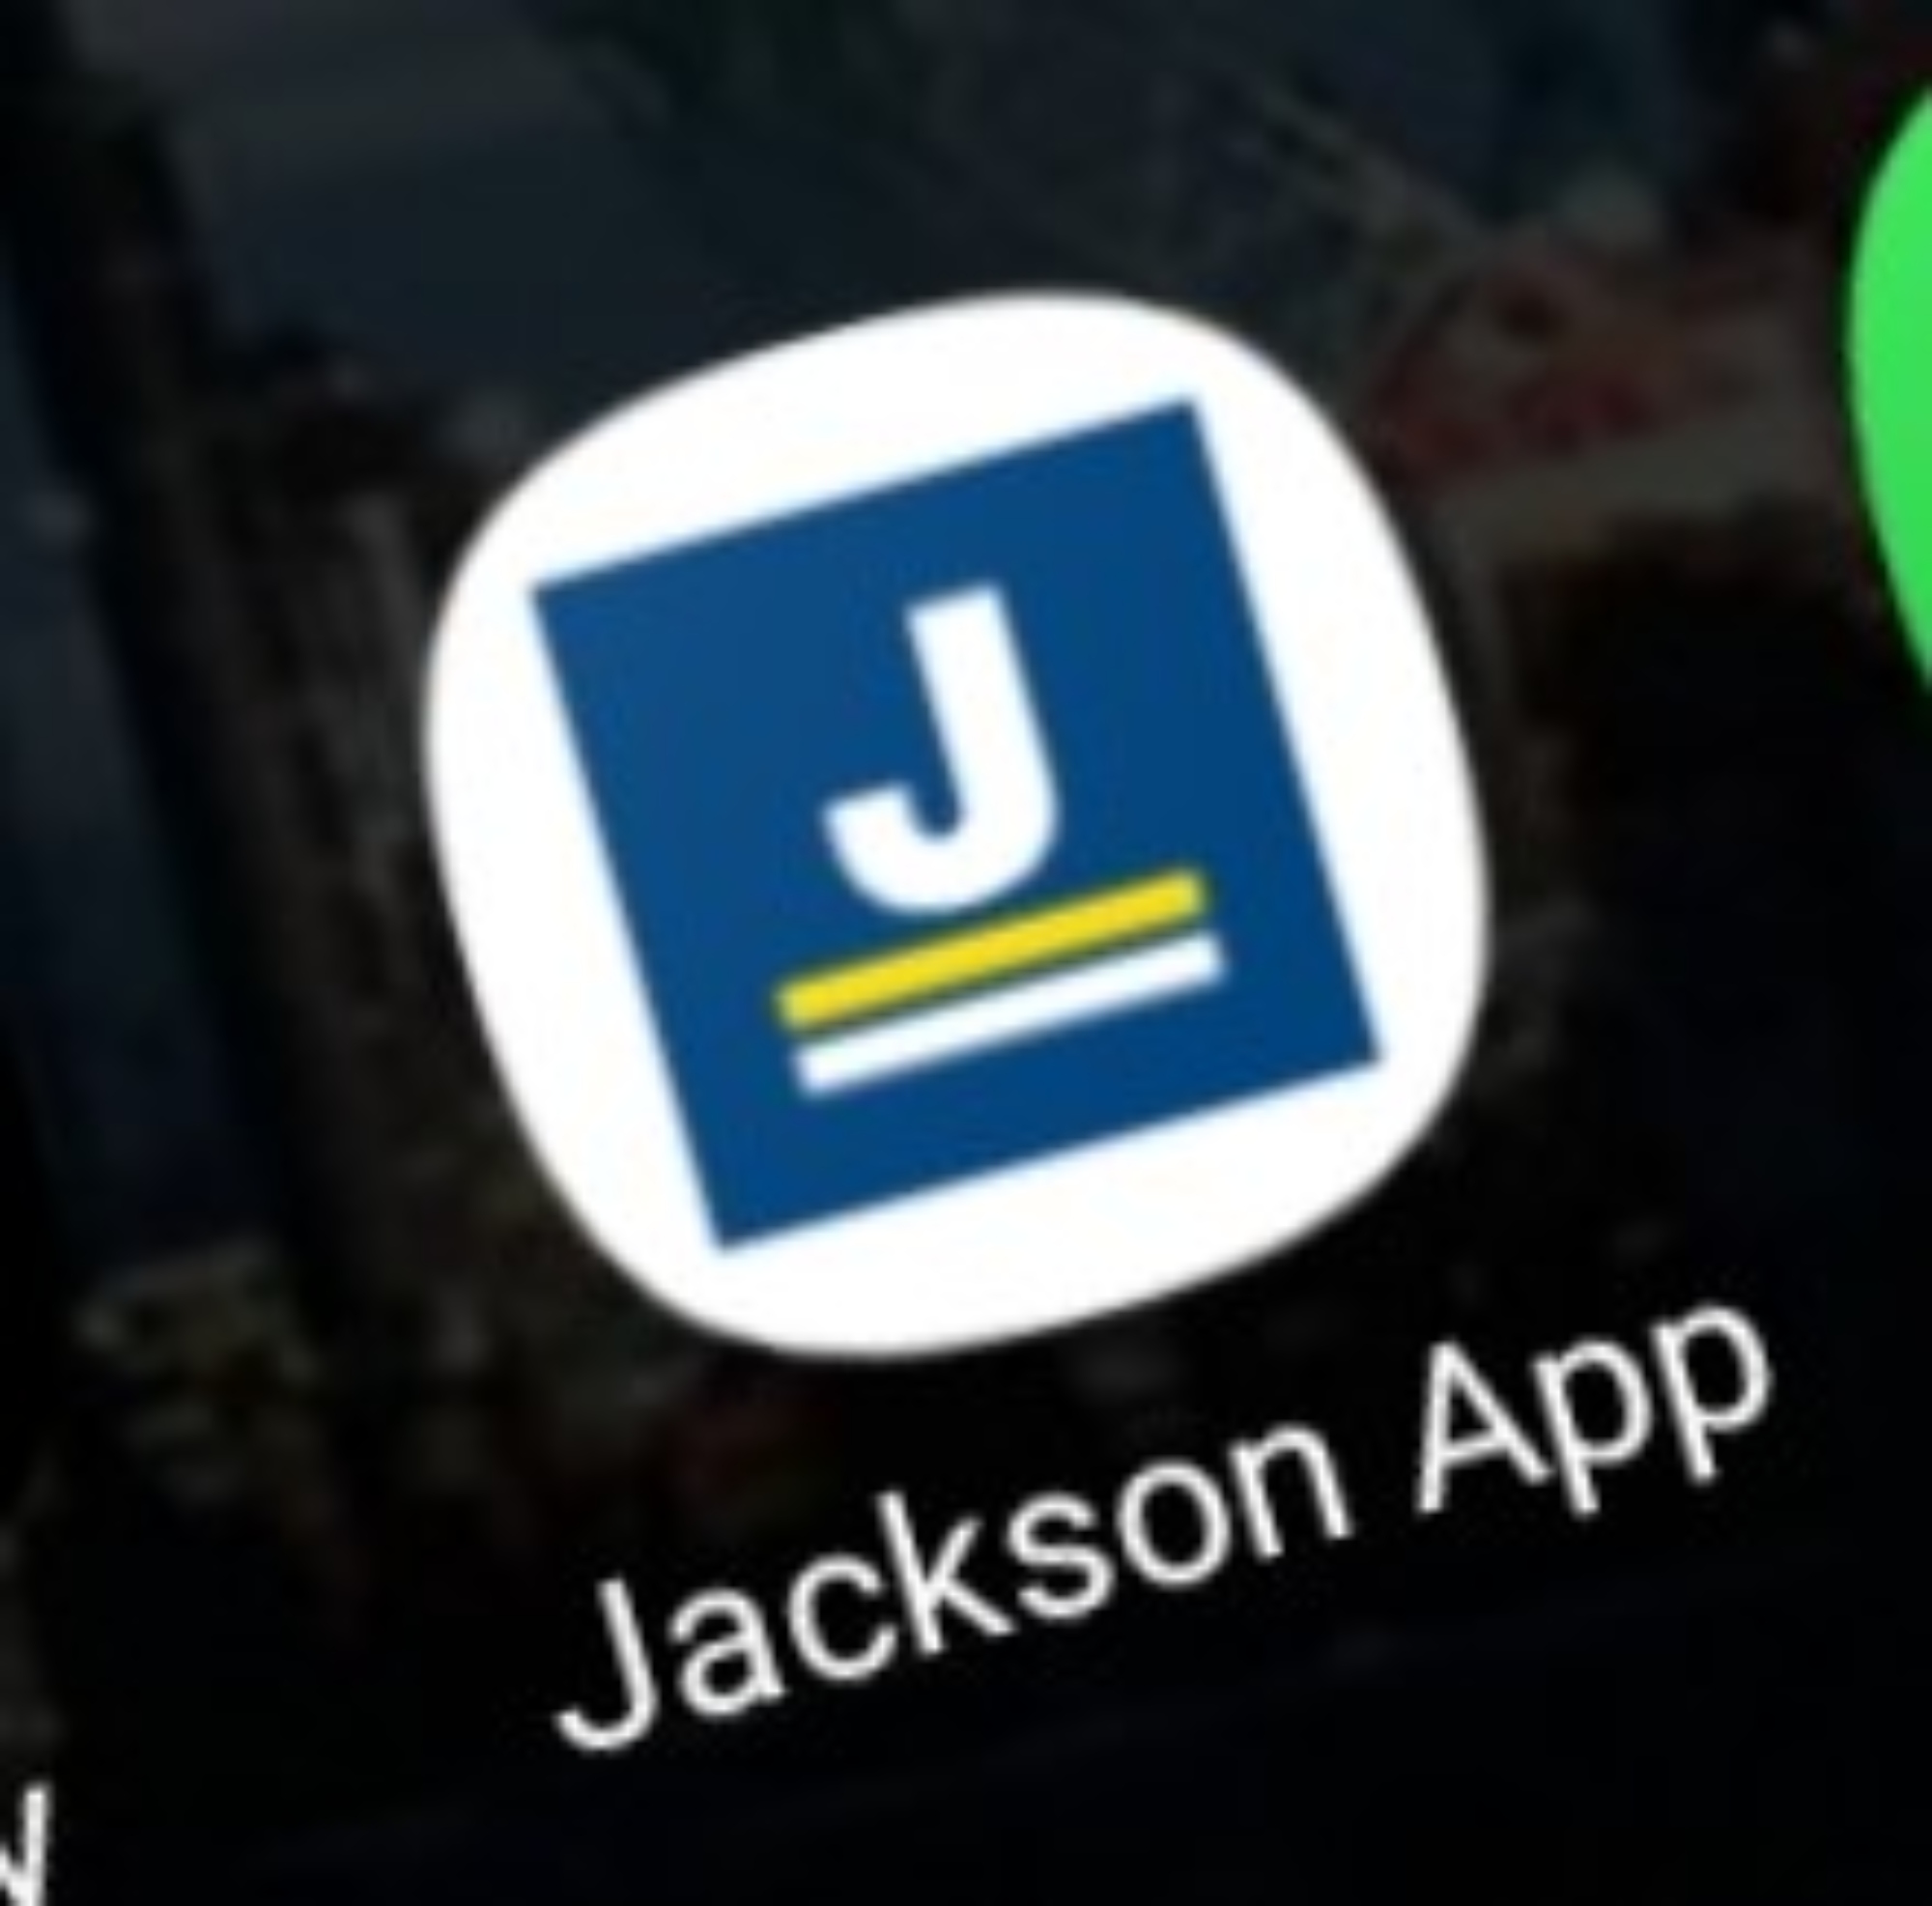 Jackson app pic 2 - 2000 pixel